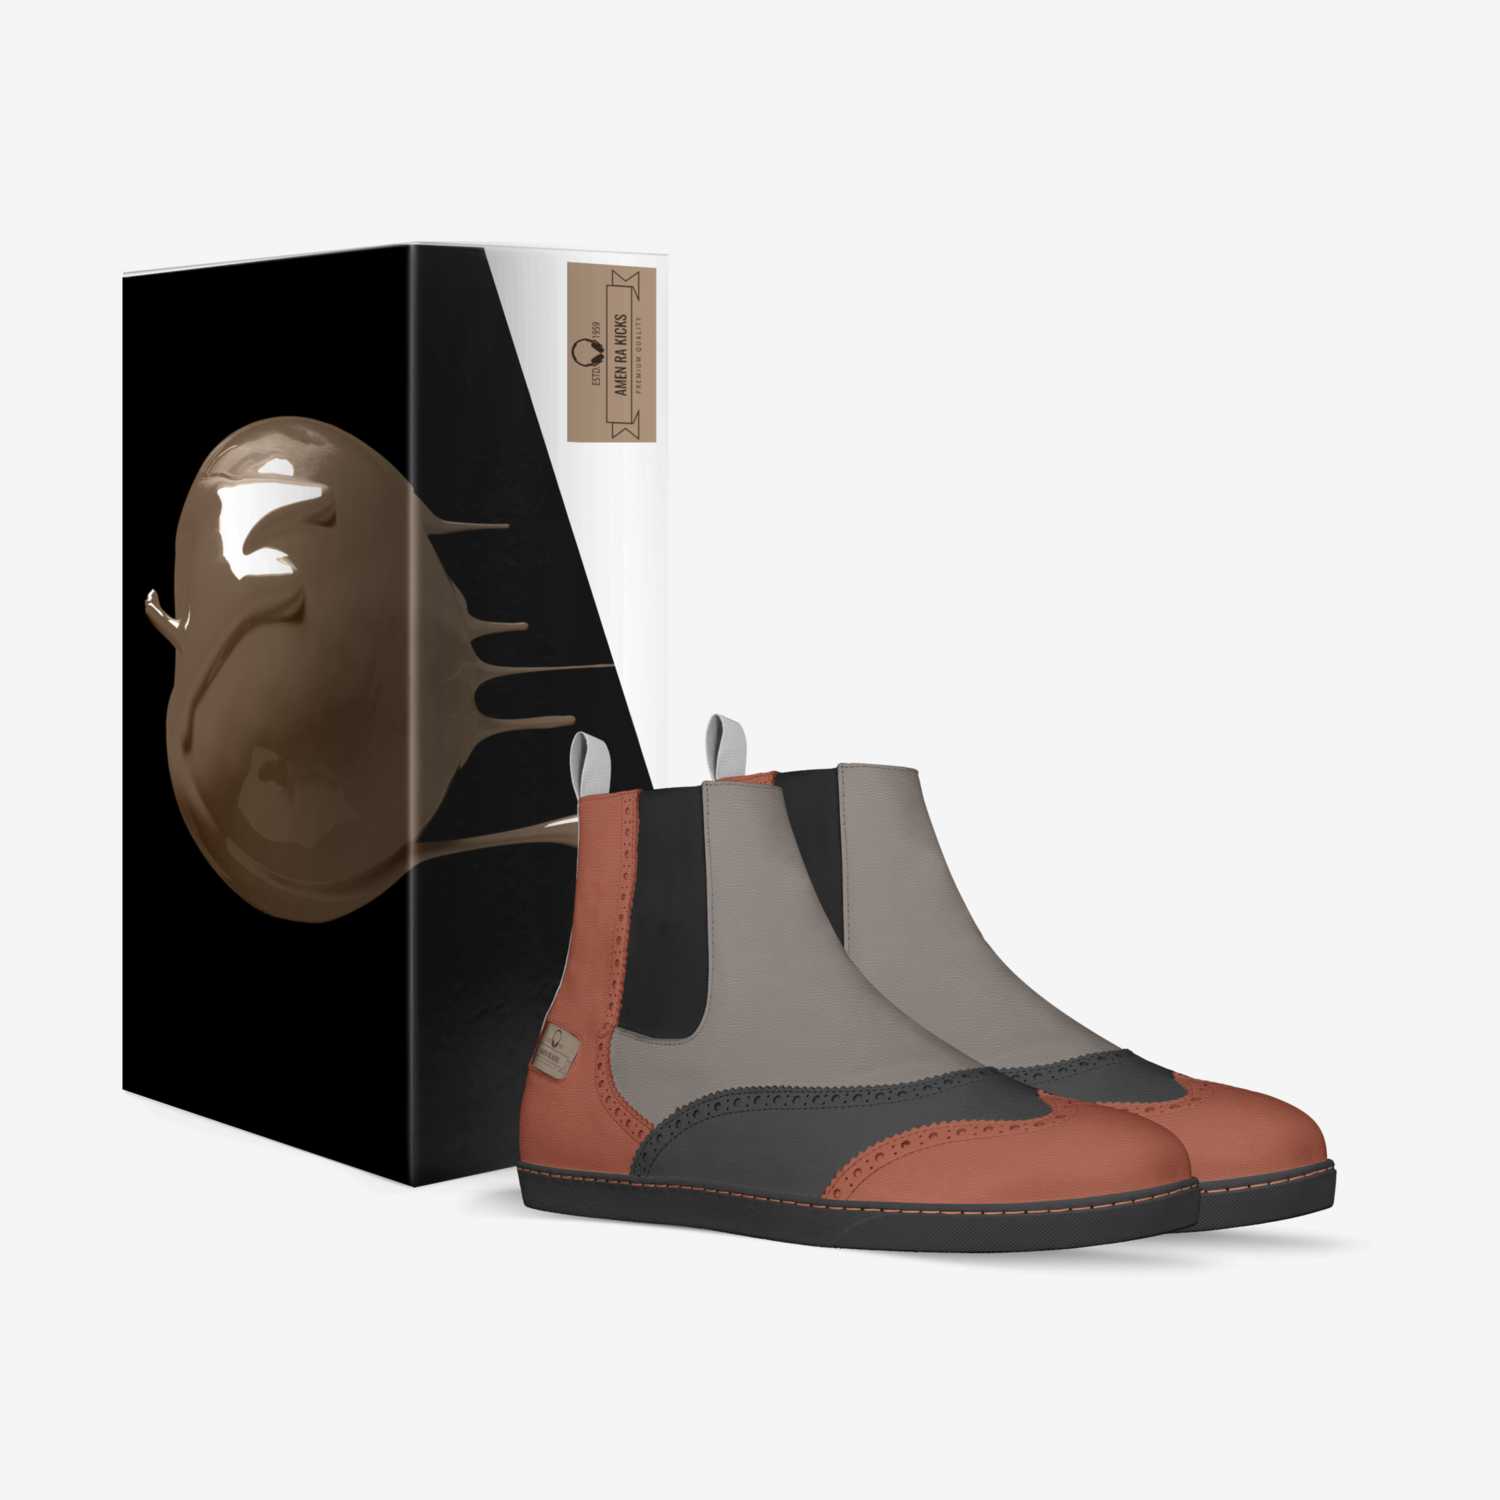 amen ra kicks custom made in Italy shoes by Daryl Hayott | Box view